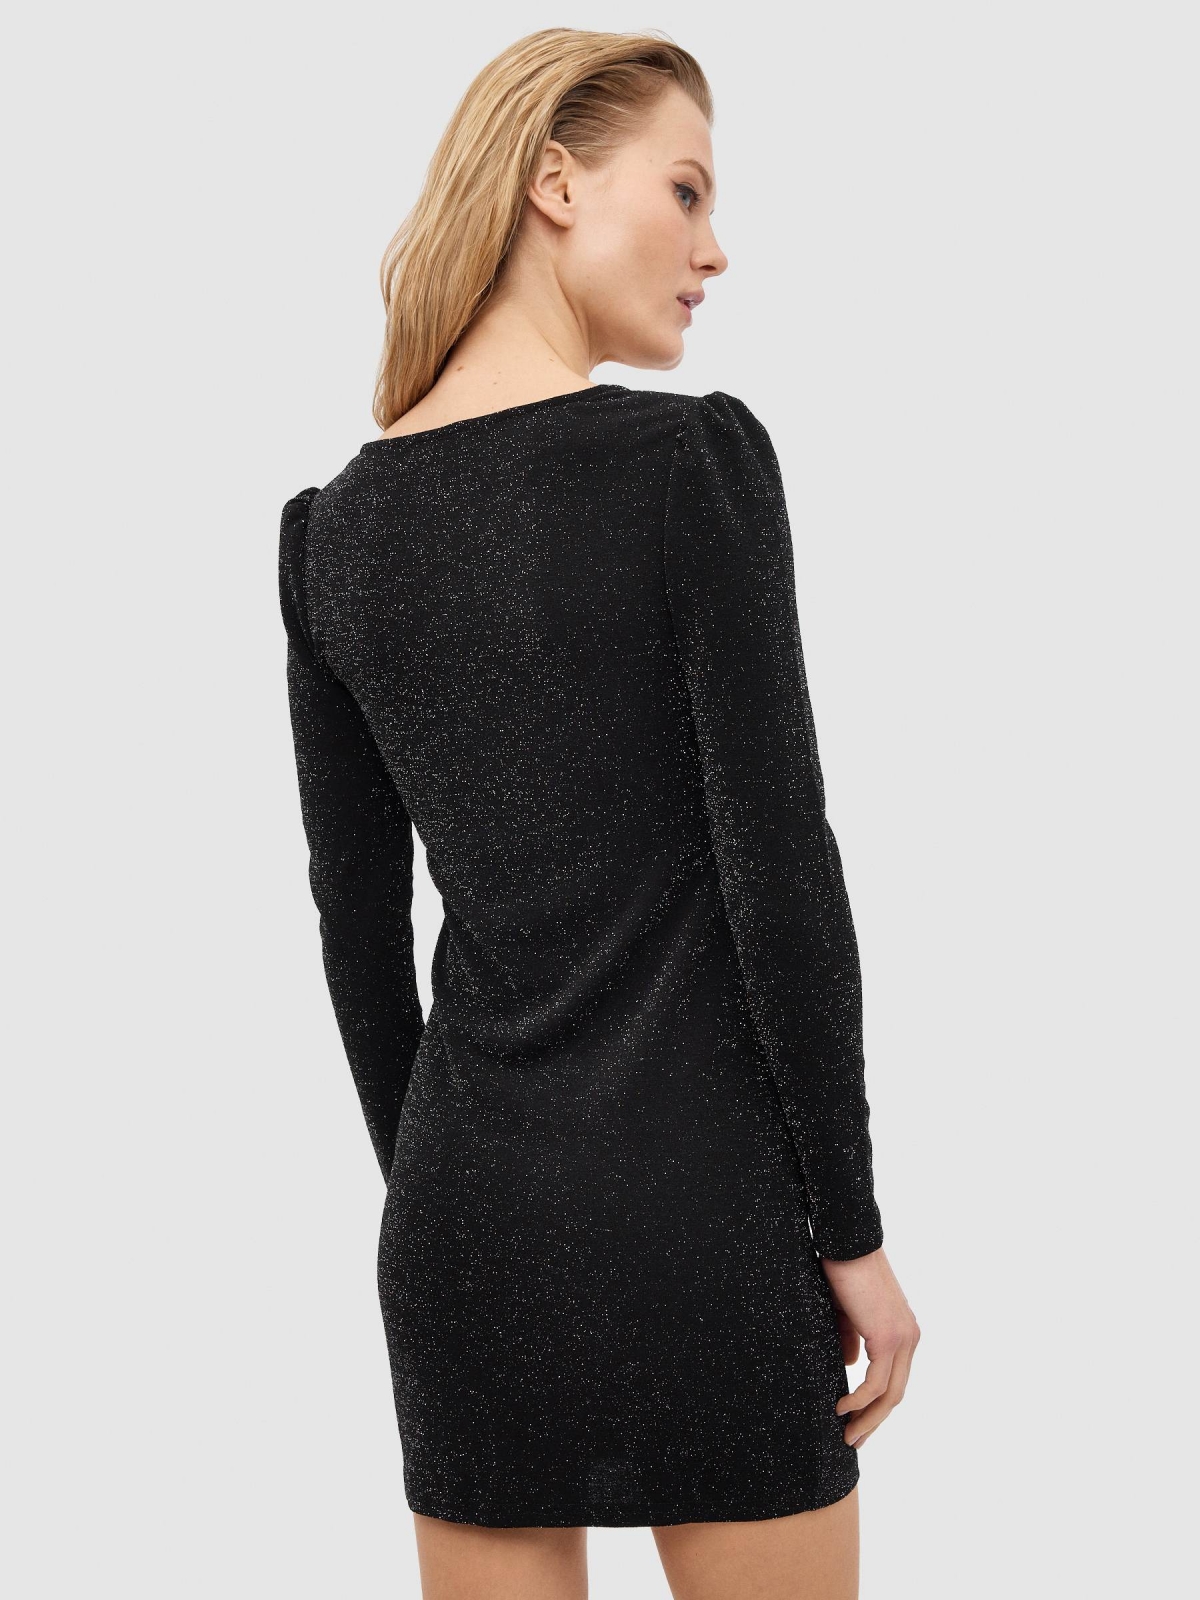 Mini lurex dress black middle back view